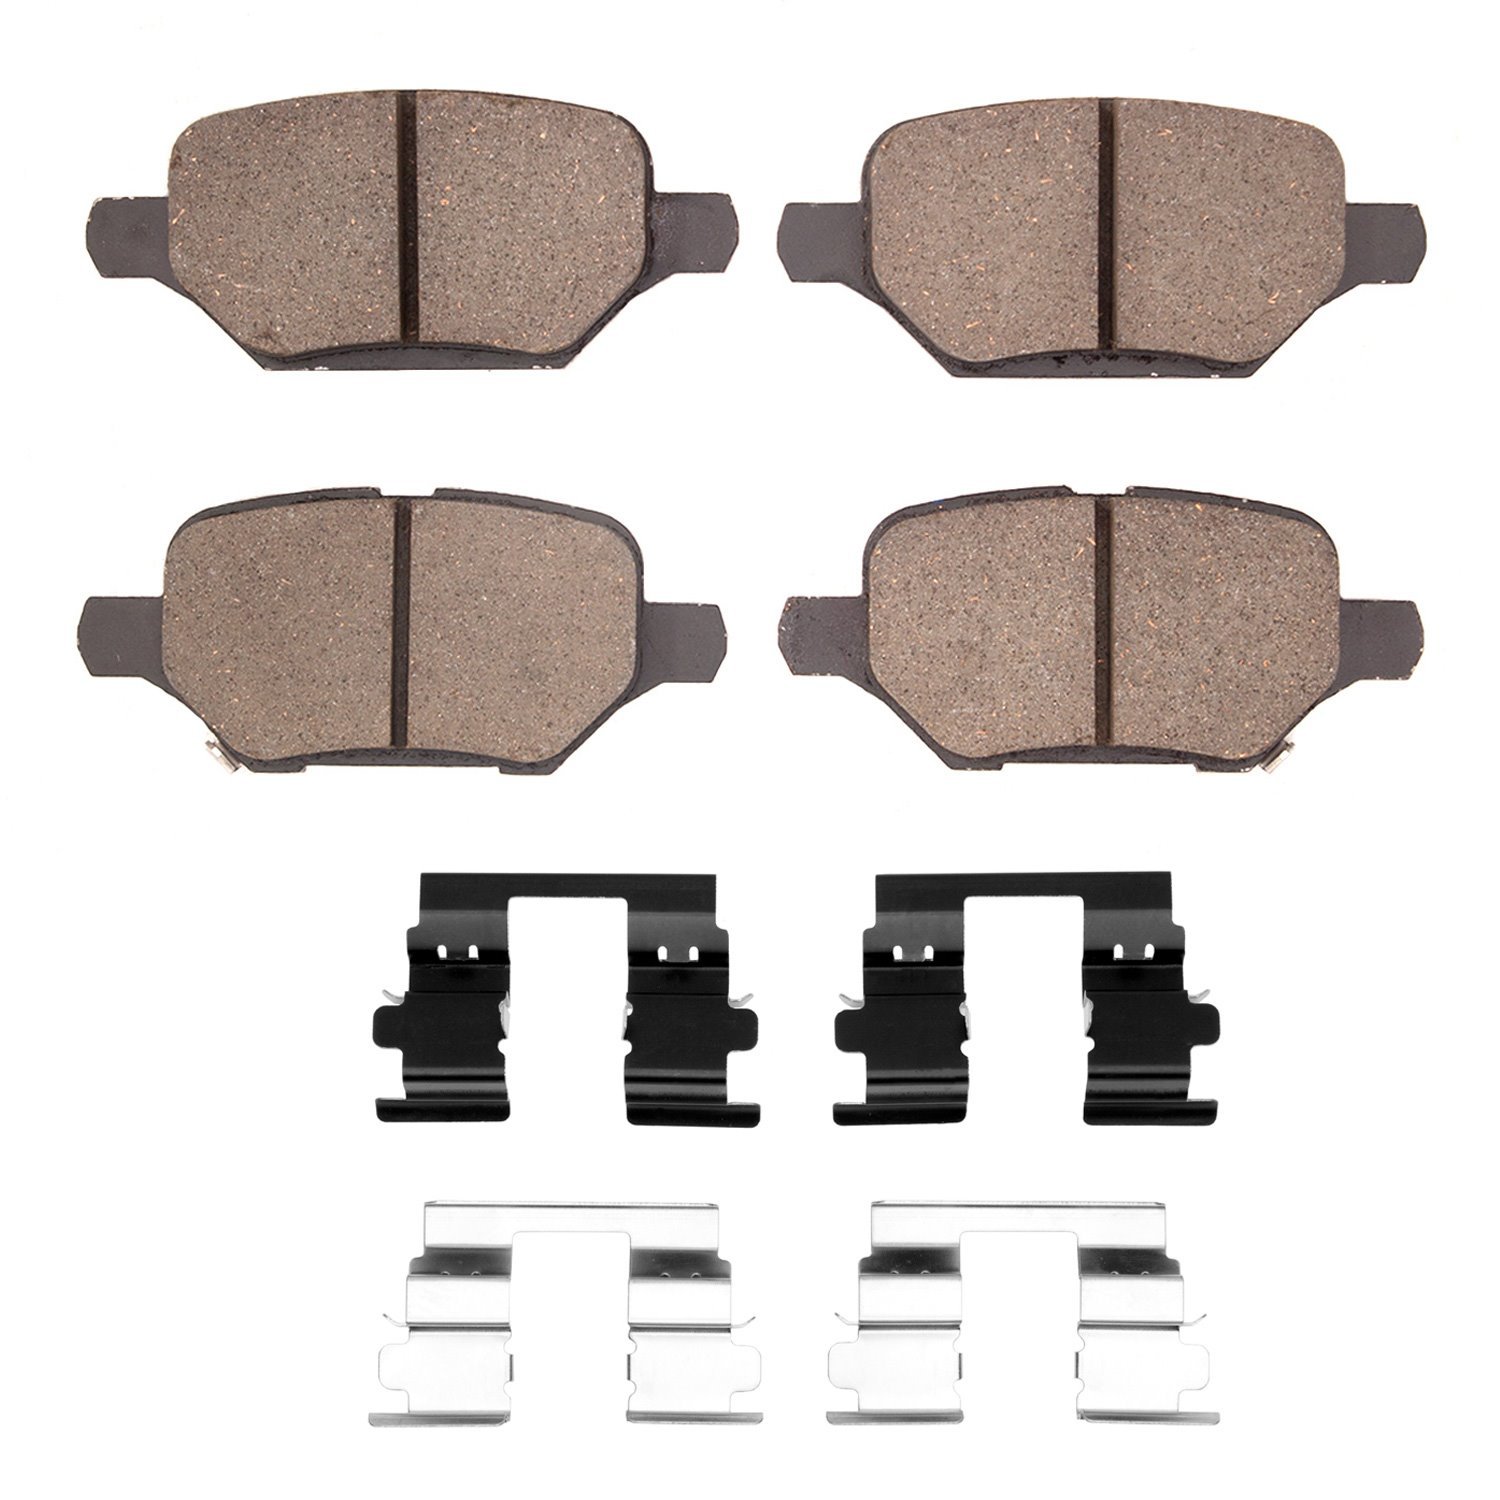 1310-2168-01 3000-Series Ceramic Brake Pads & Hardware Kit, Fits Select GM, Position: Rear